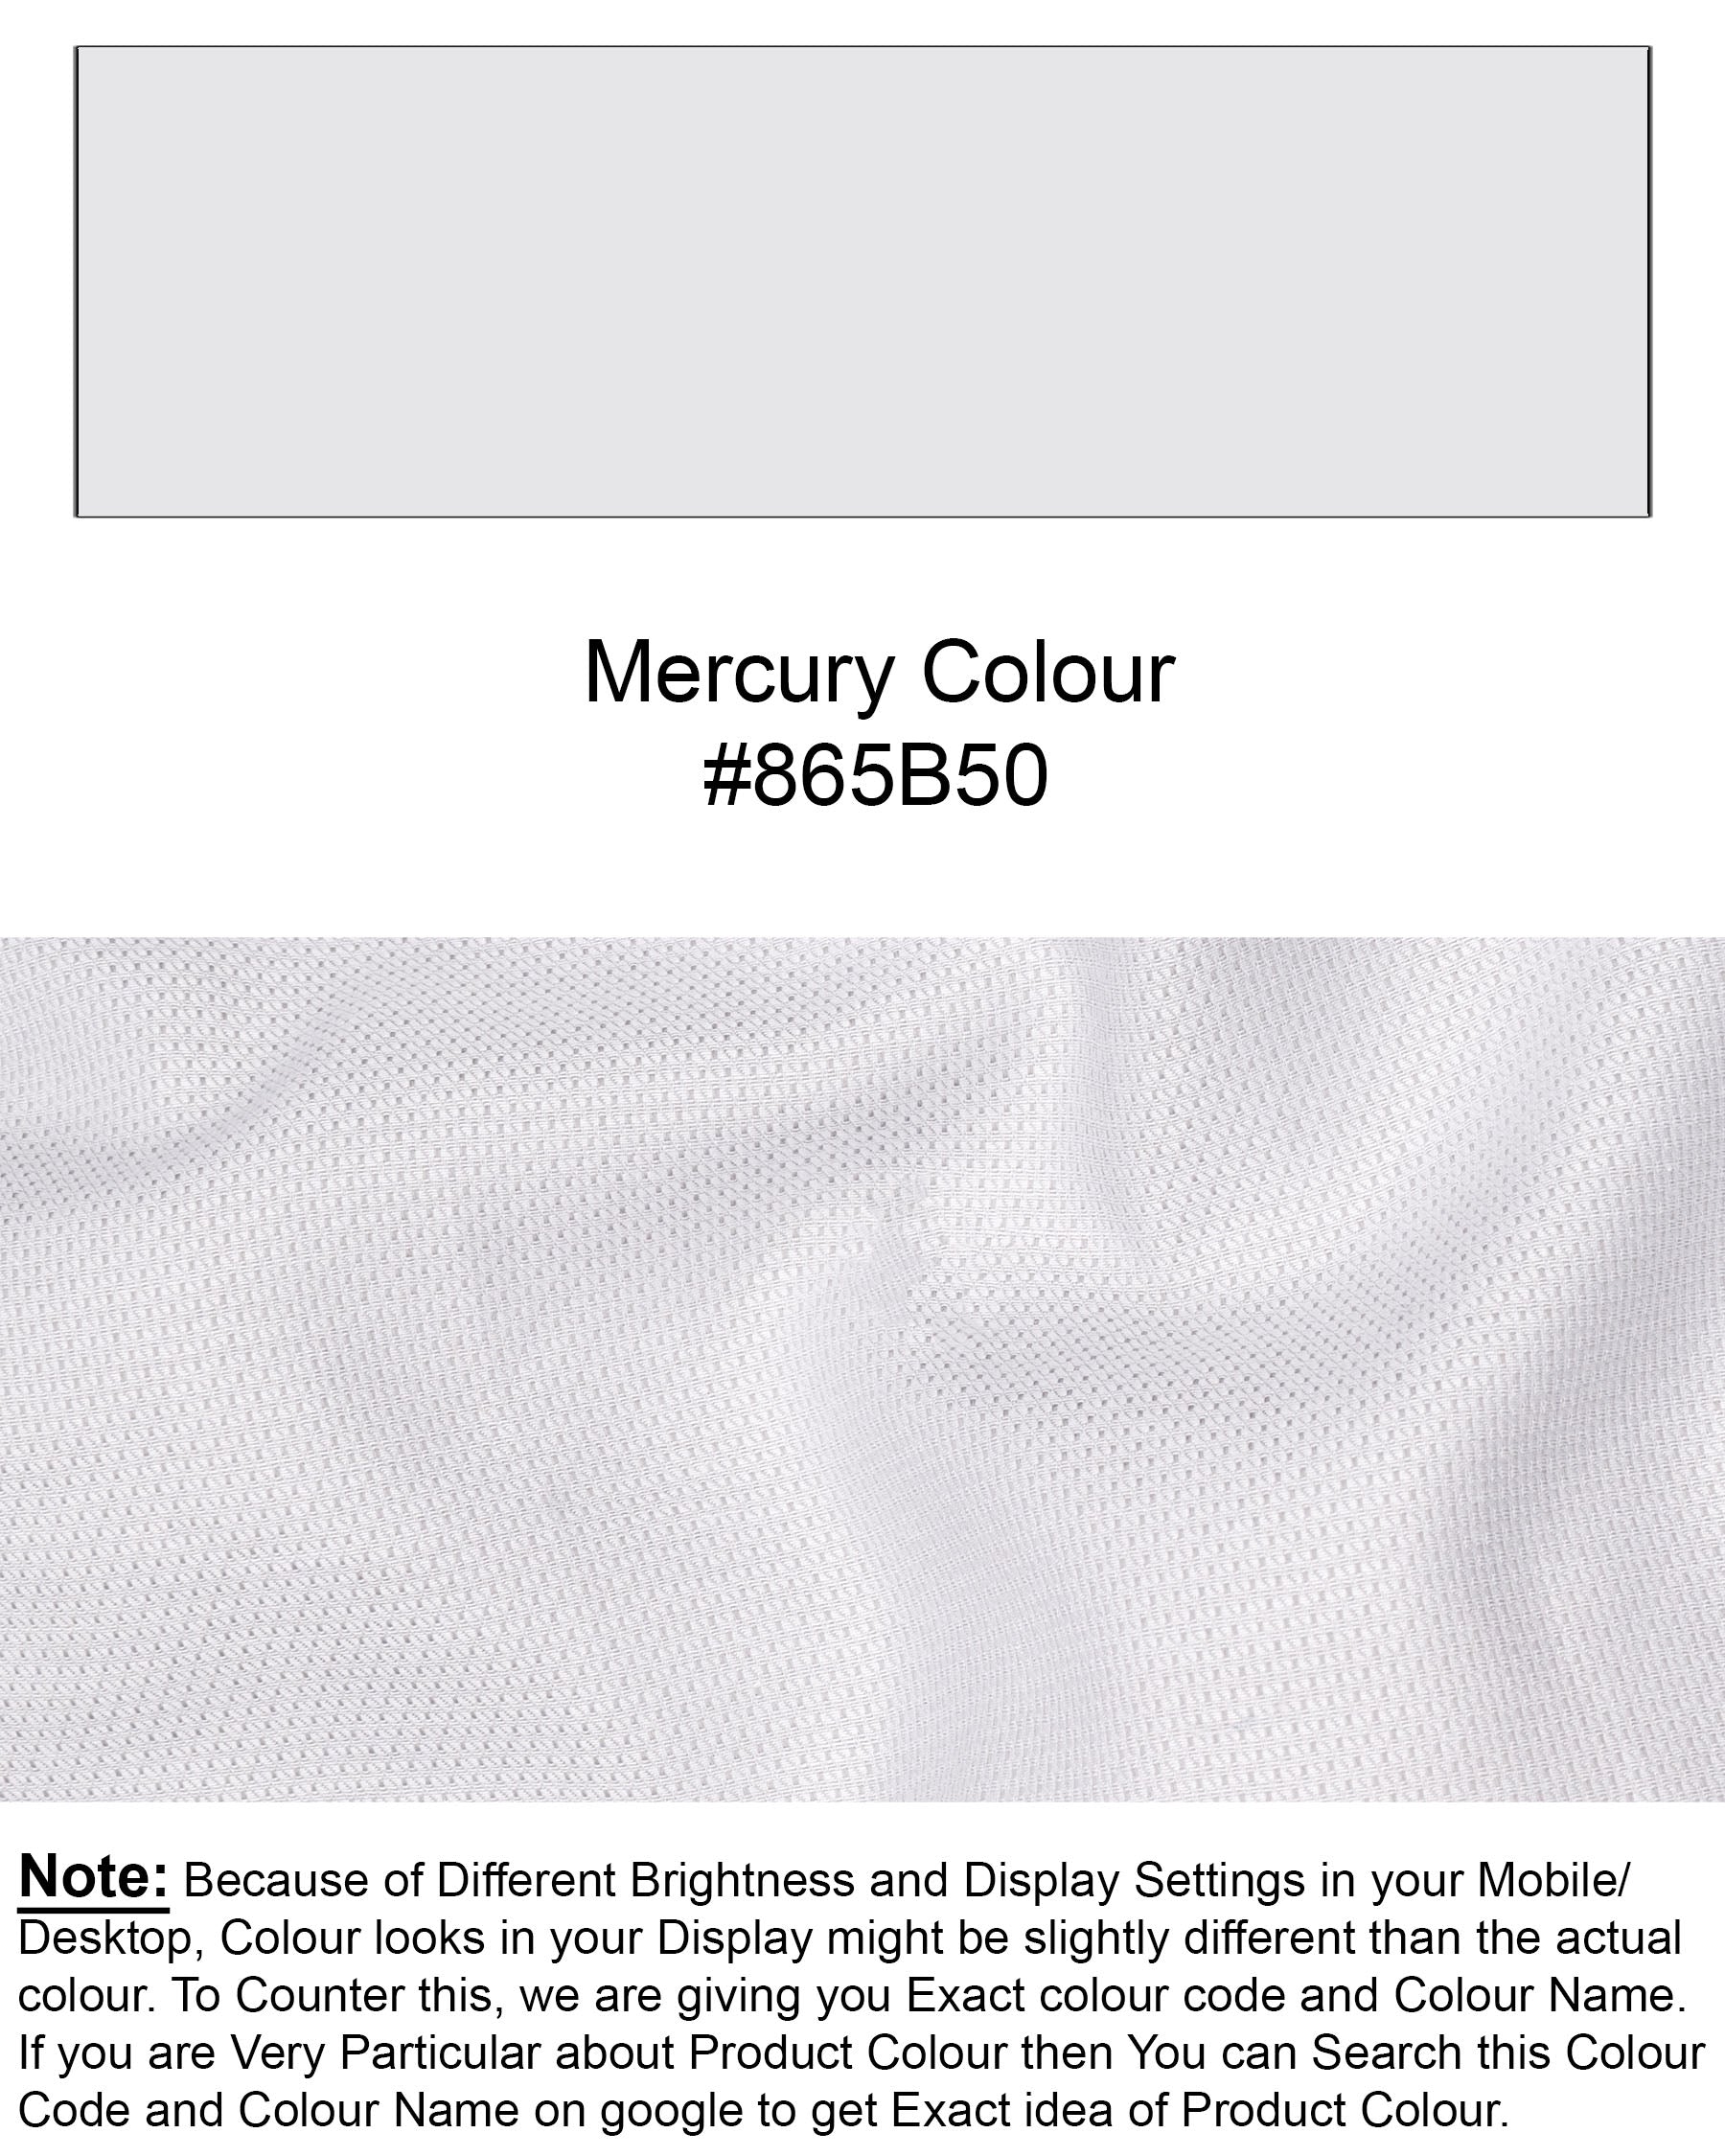 Mercury Grey Dobby Textured Premium Cotton Shirt 6995-CA-38,6995-CA-38,6995-CA-39,6995-CA-39,6995-CA-40,6995-CA-40,6995-CA-42,6995-CA-42,6995-CA-44,6995-CA-44,6995-CA-46,6995-CA-46,6995-CA-48,6995-CA-48,6995-CA-50,6995-CA-50,6995-CA-52,6995-CA-52